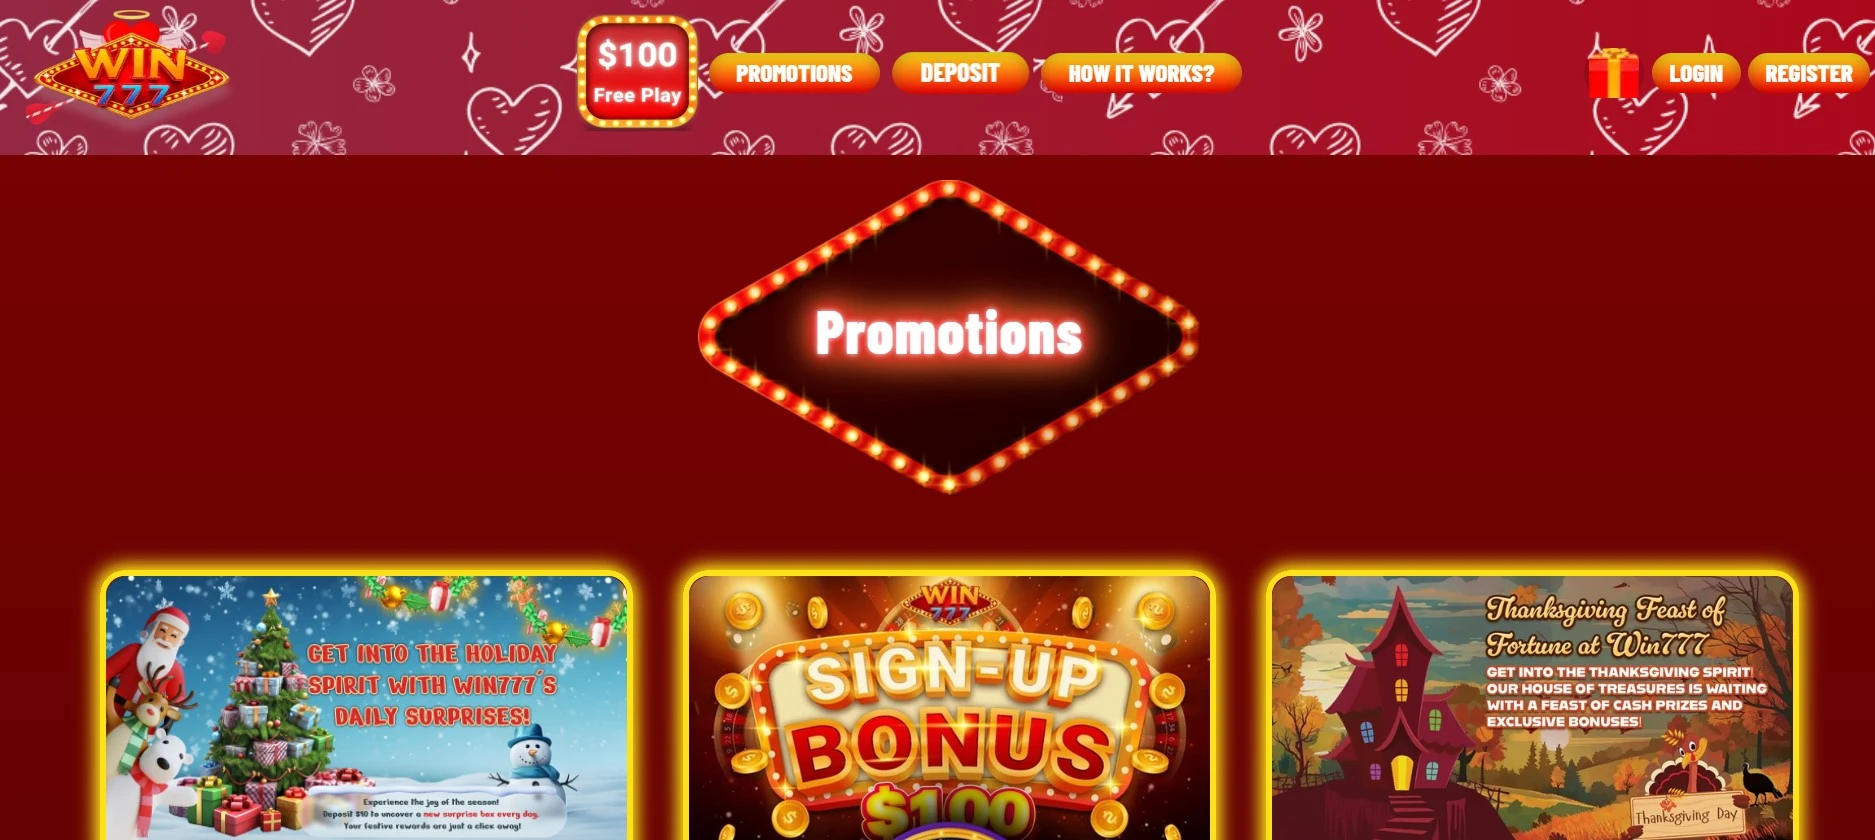 Win777 bonuses